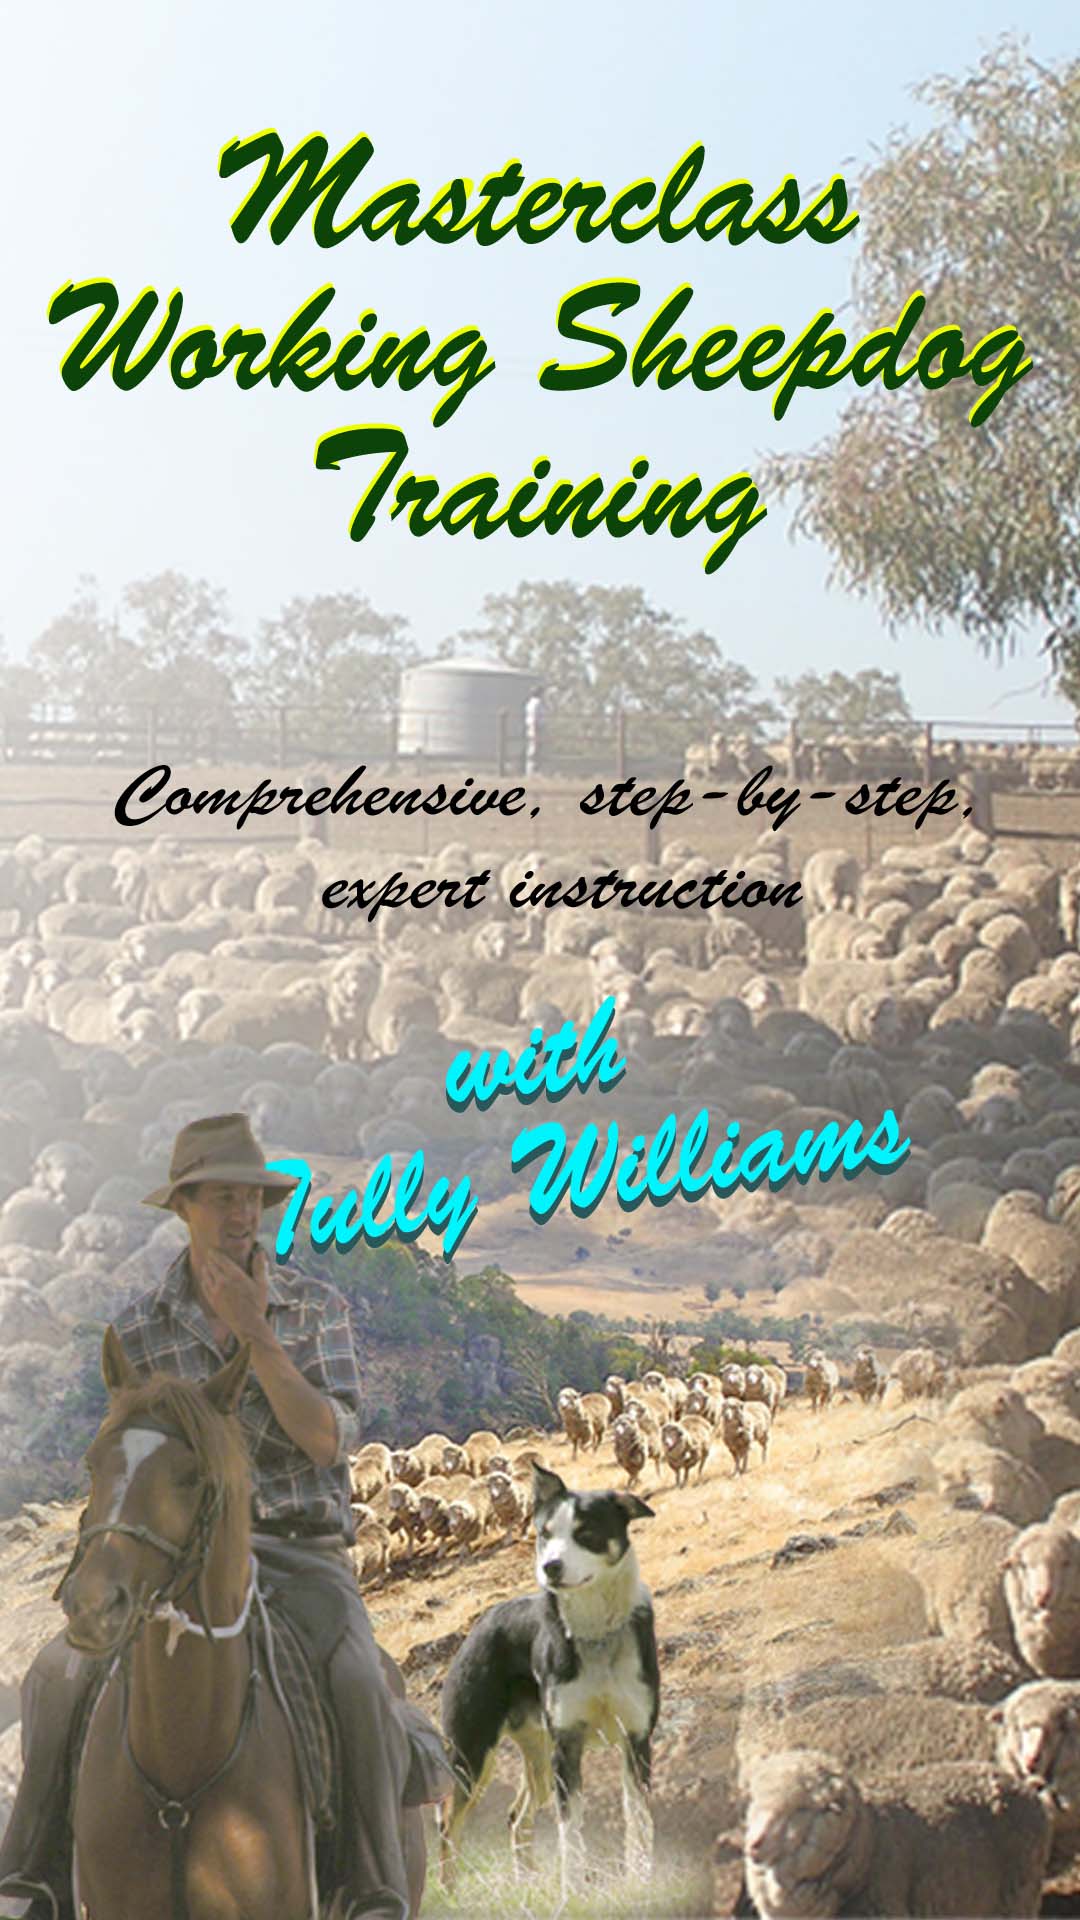 Working Sheepdog Training Masterclass videos header image